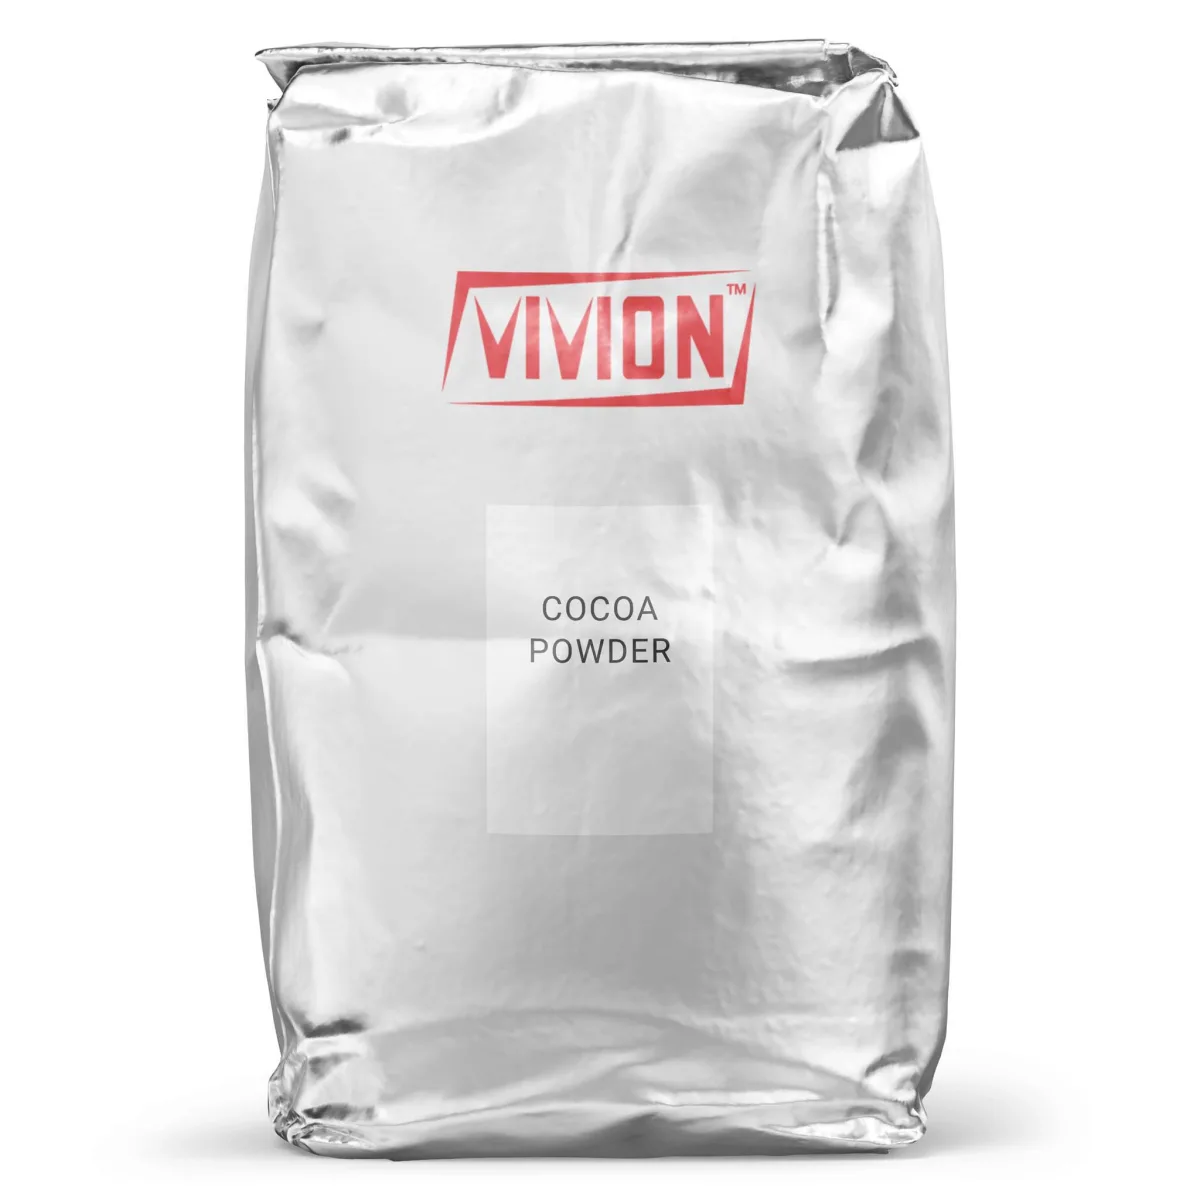 Bag of Vivion's wholesale Cocoa Powder.